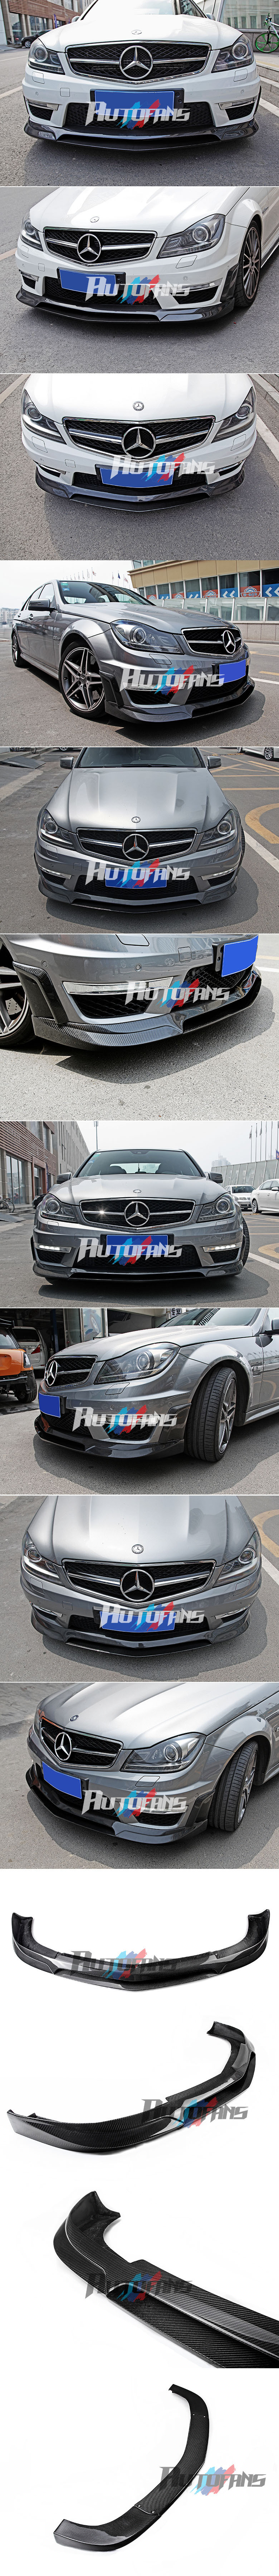 Накладки для переднего бампера Type-2 C63 AMG Facelift (карбон) Mercedes-Benz W204 Sedan Coupe Carbon Fiber